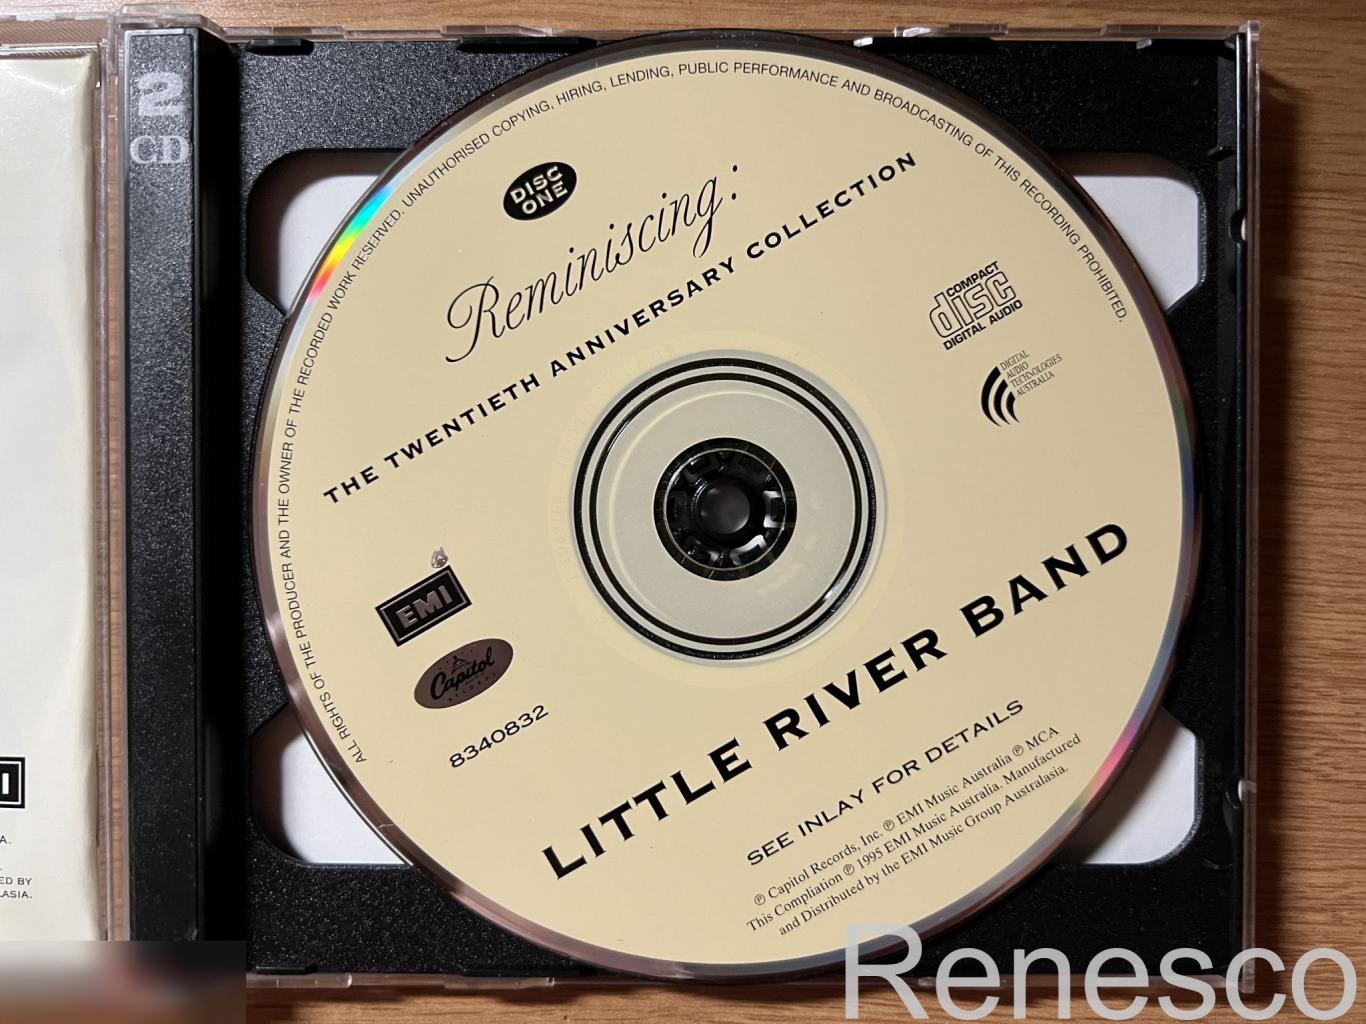 Little River Band – Reminiscing: The Twentieth Anniversary Collection (Australia 4